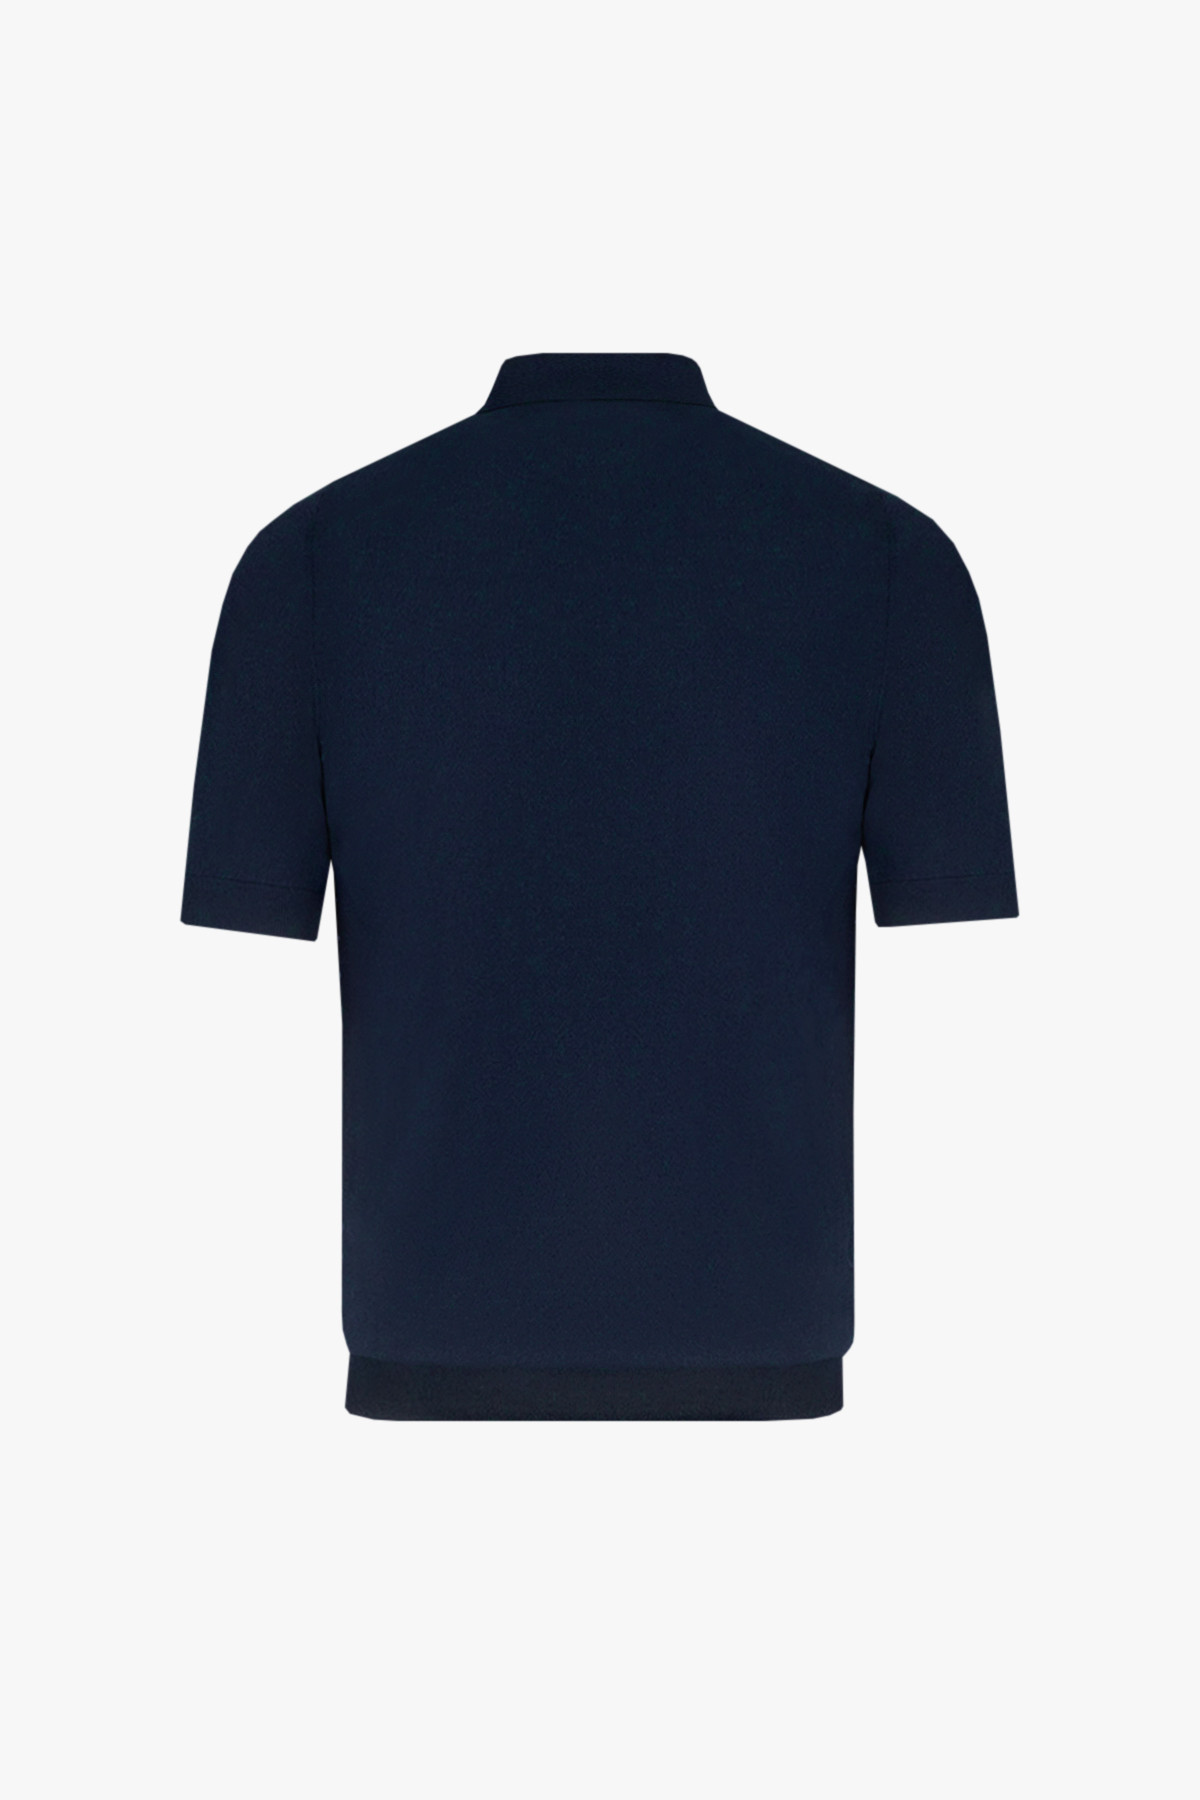 Navy-blue zipped polo shirt, 